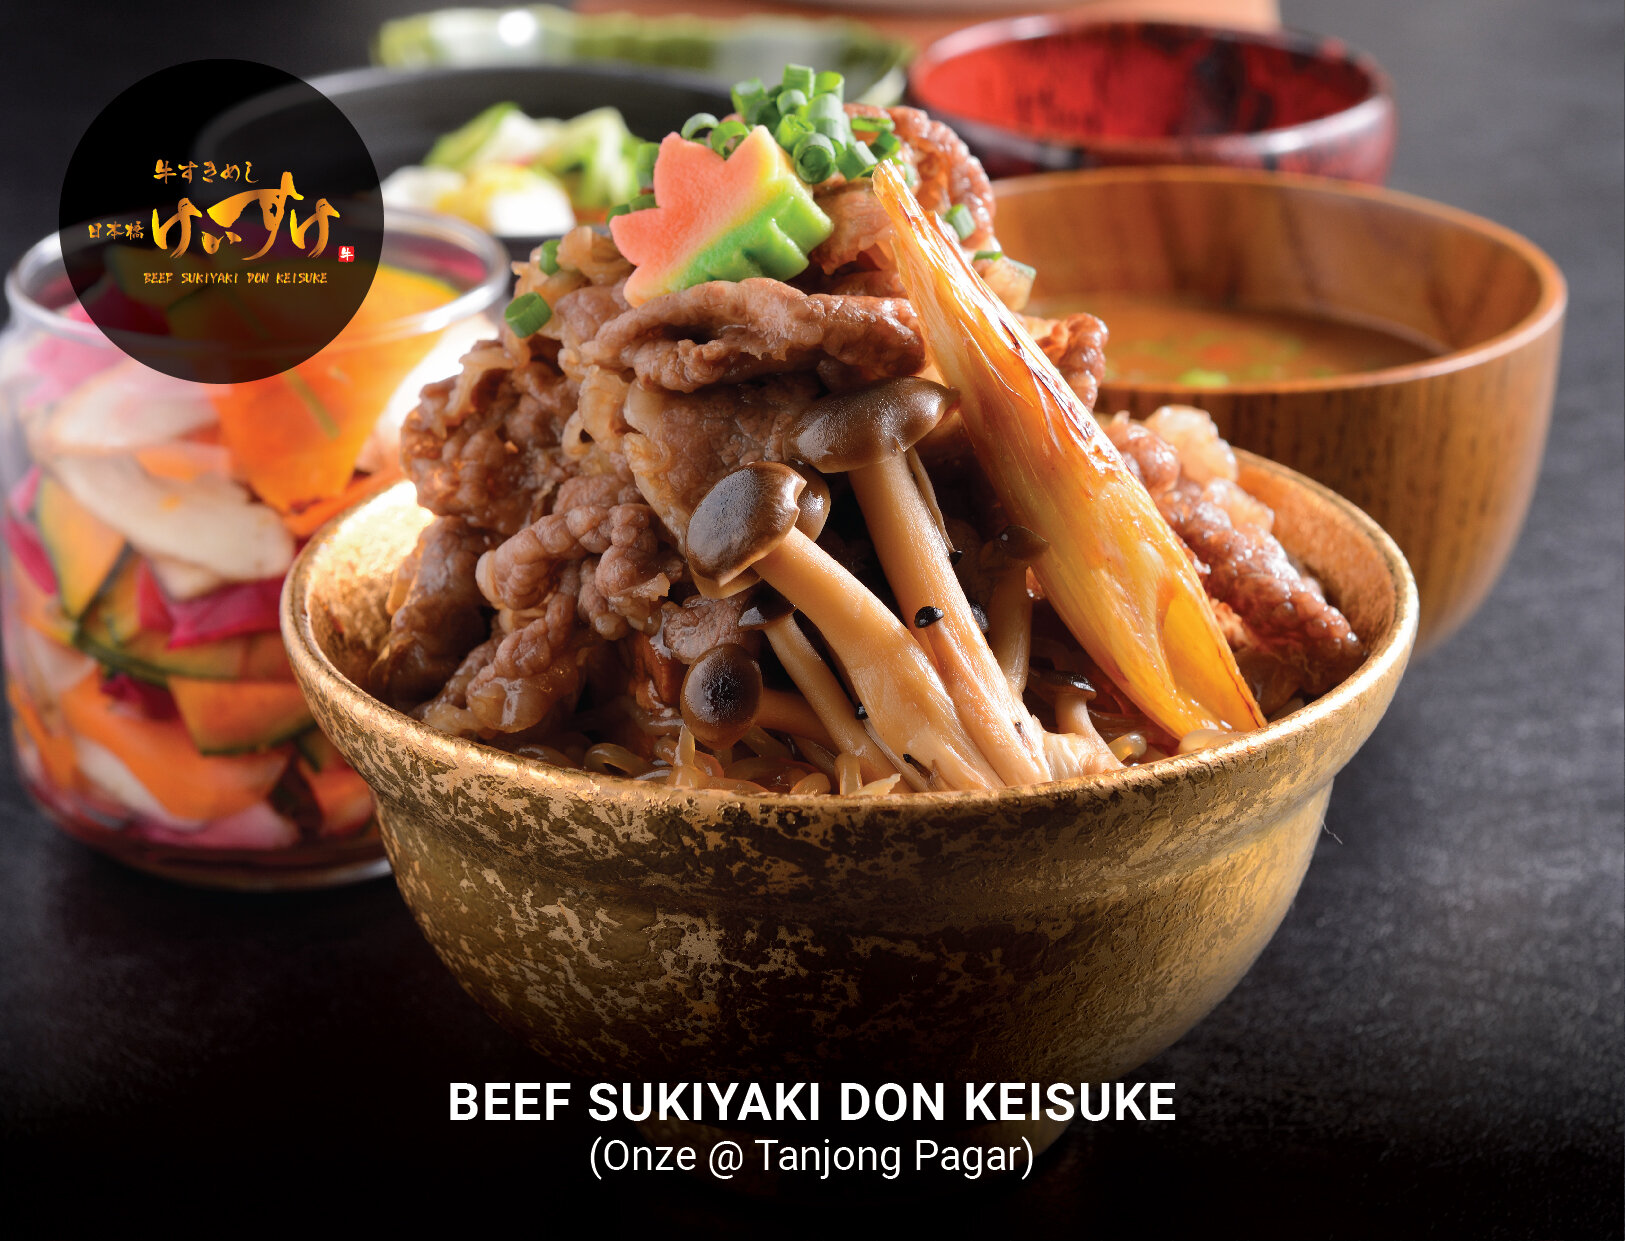 Beef Sukiyaki Don Keisuke